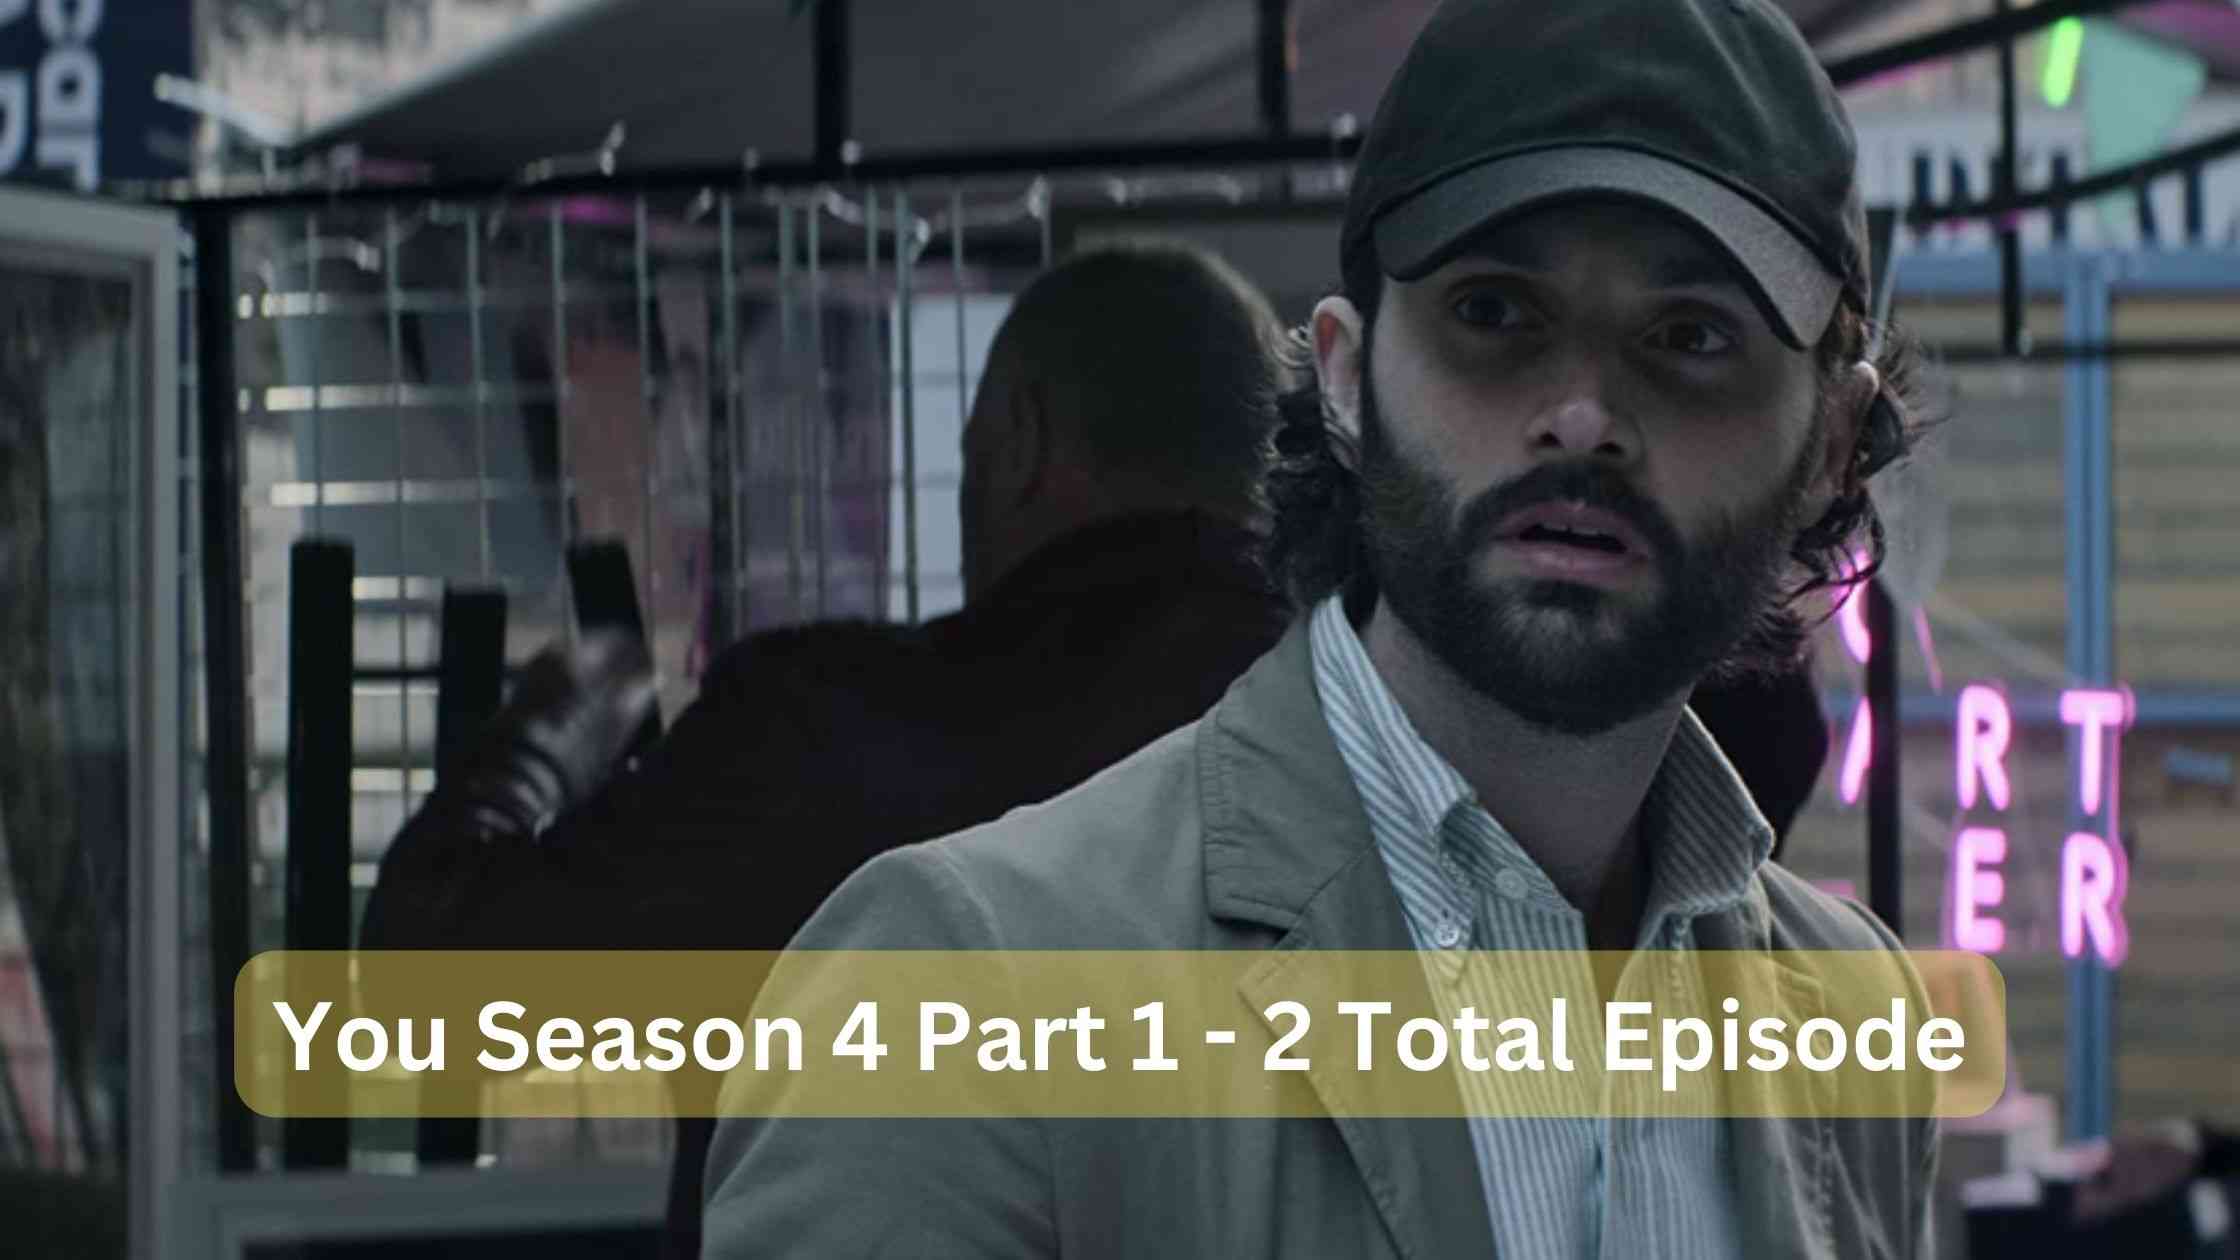 You Season 4 Total Episode